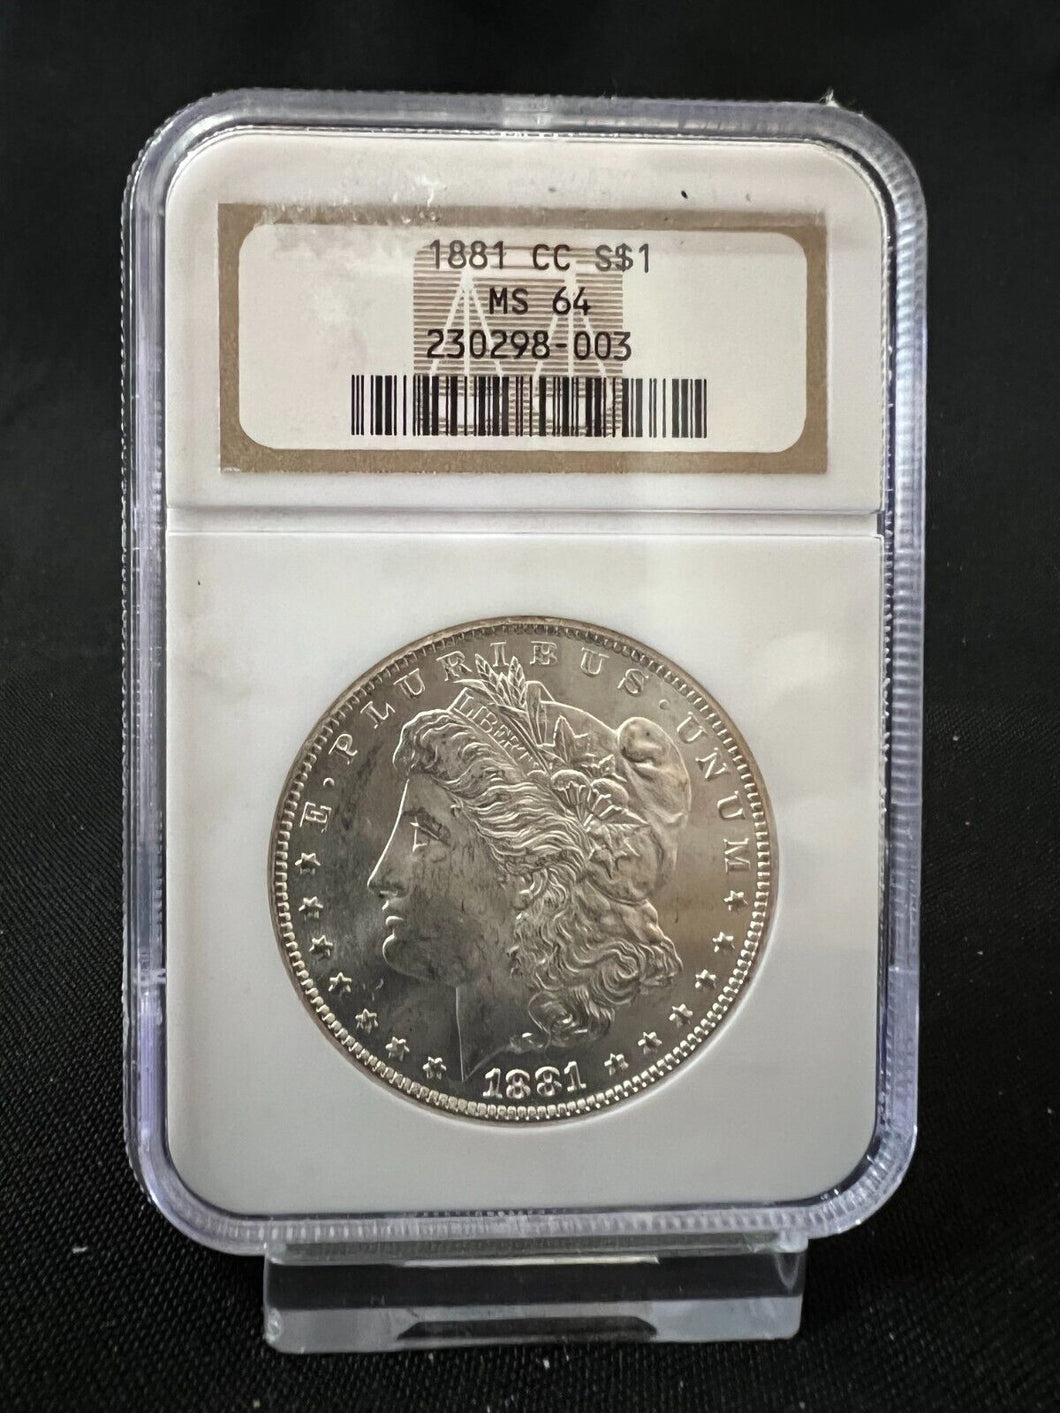 1881-CC $1 Morgan Silver Dollar NGC MS64 Fully Struck Very Frosty Blast White